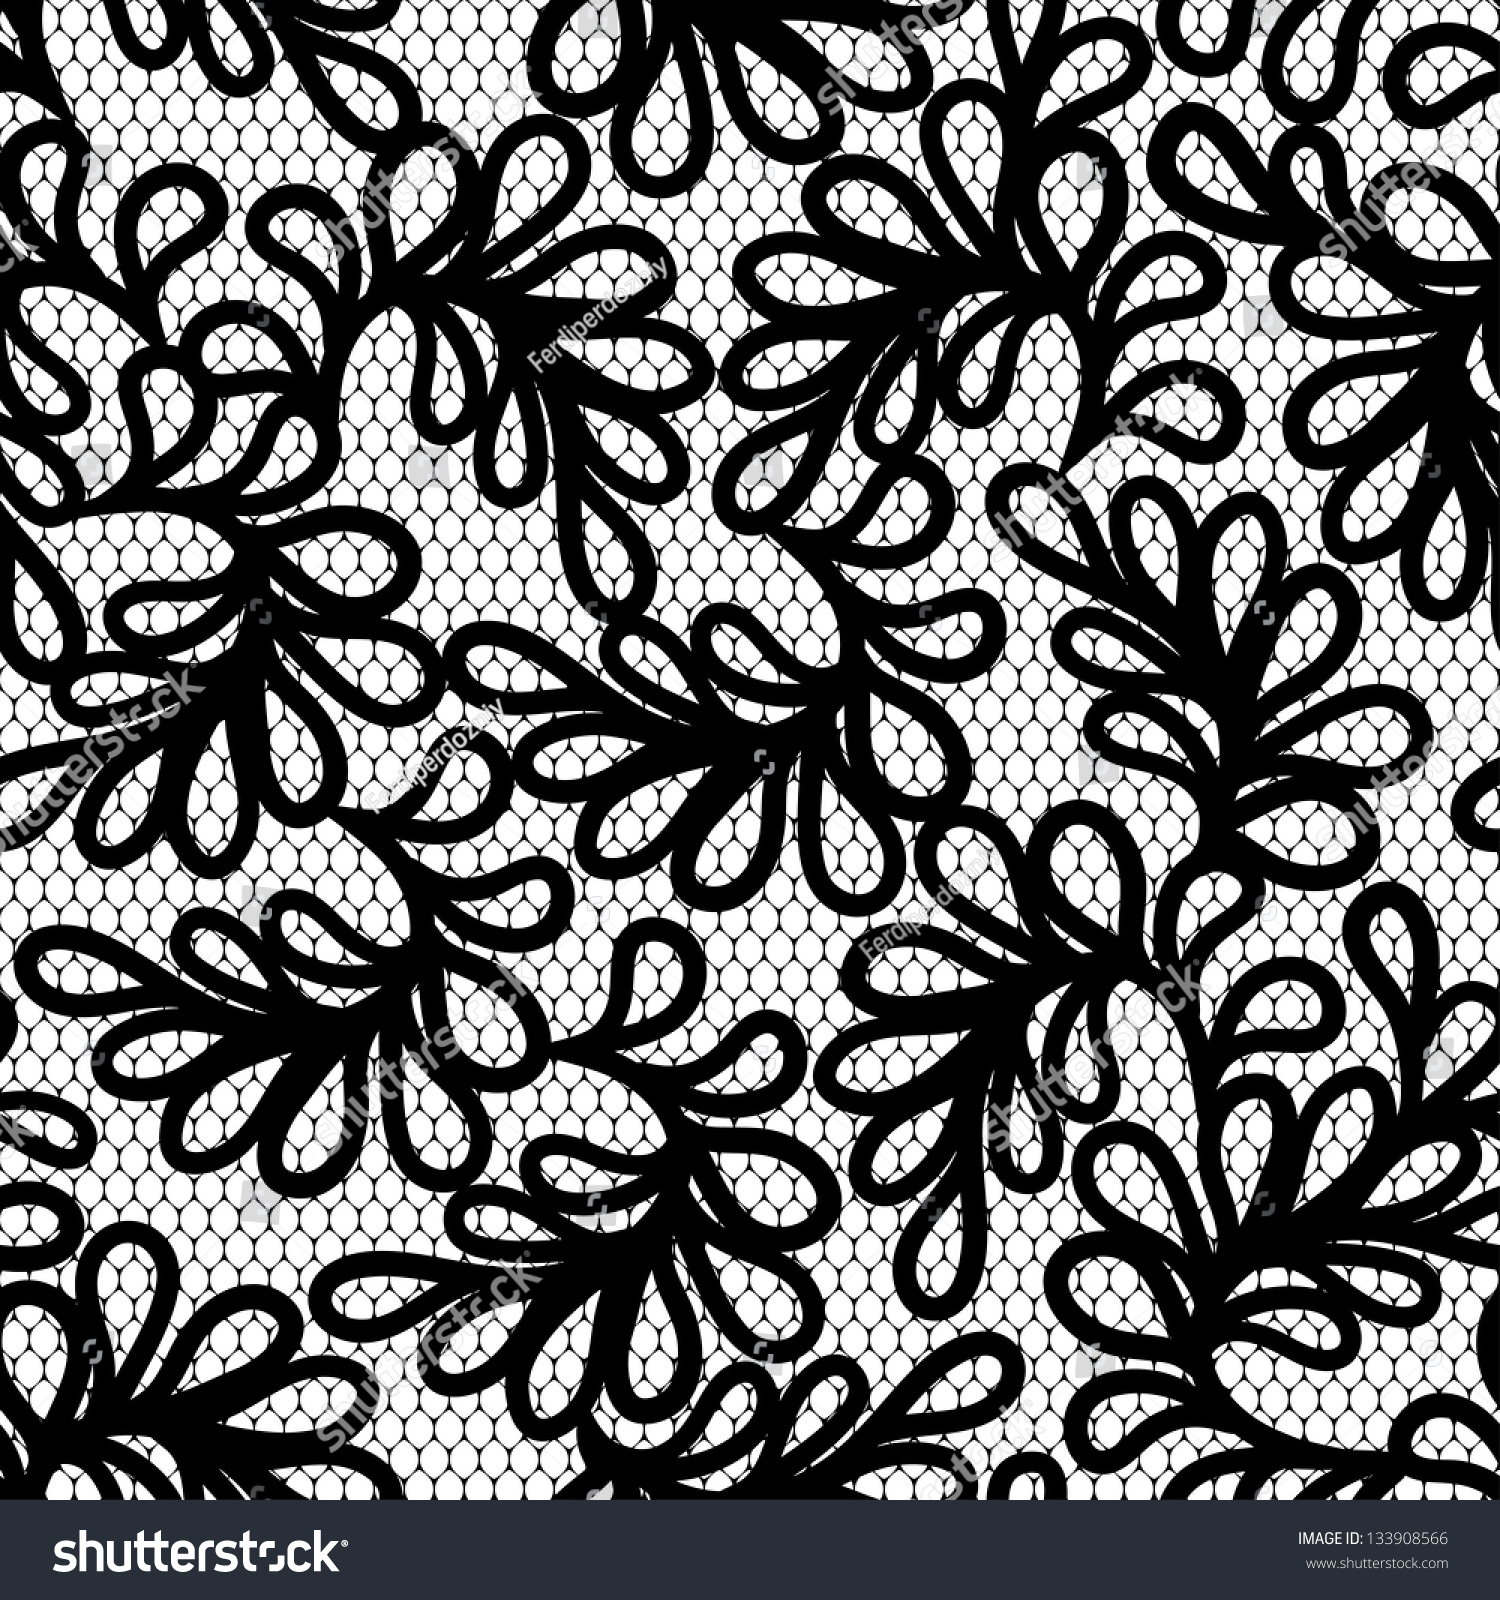 Seamless Lace Pattern, Vector Illustration - 133908566 : Shutterstock